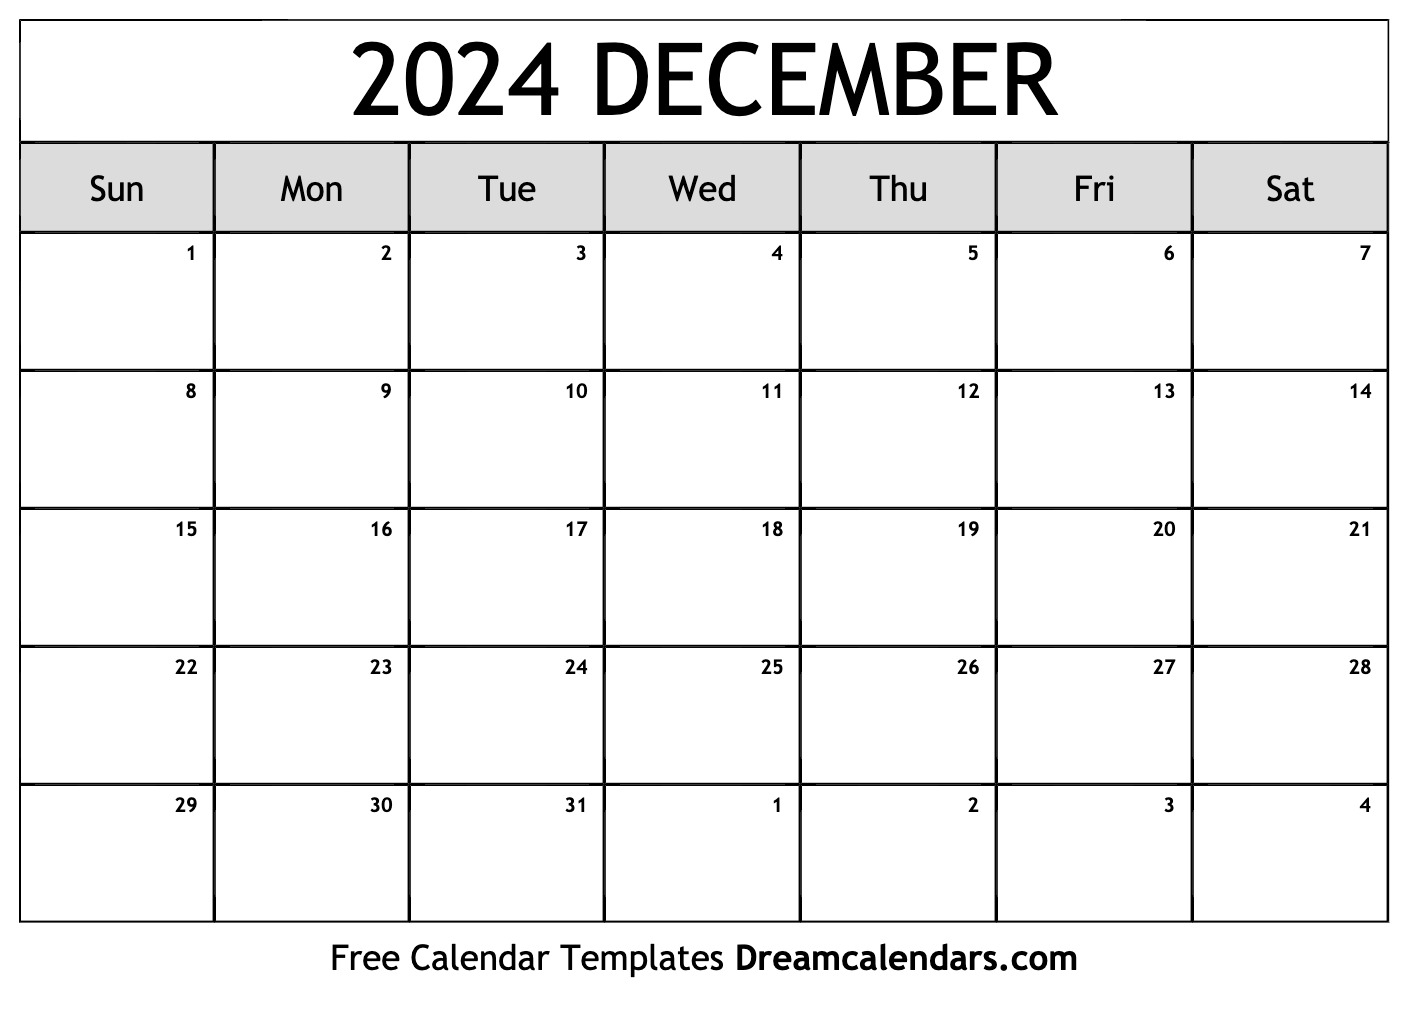 December 2024 Calendar | Free Blank Printable With Holidays for Calendar December 2024 Printable